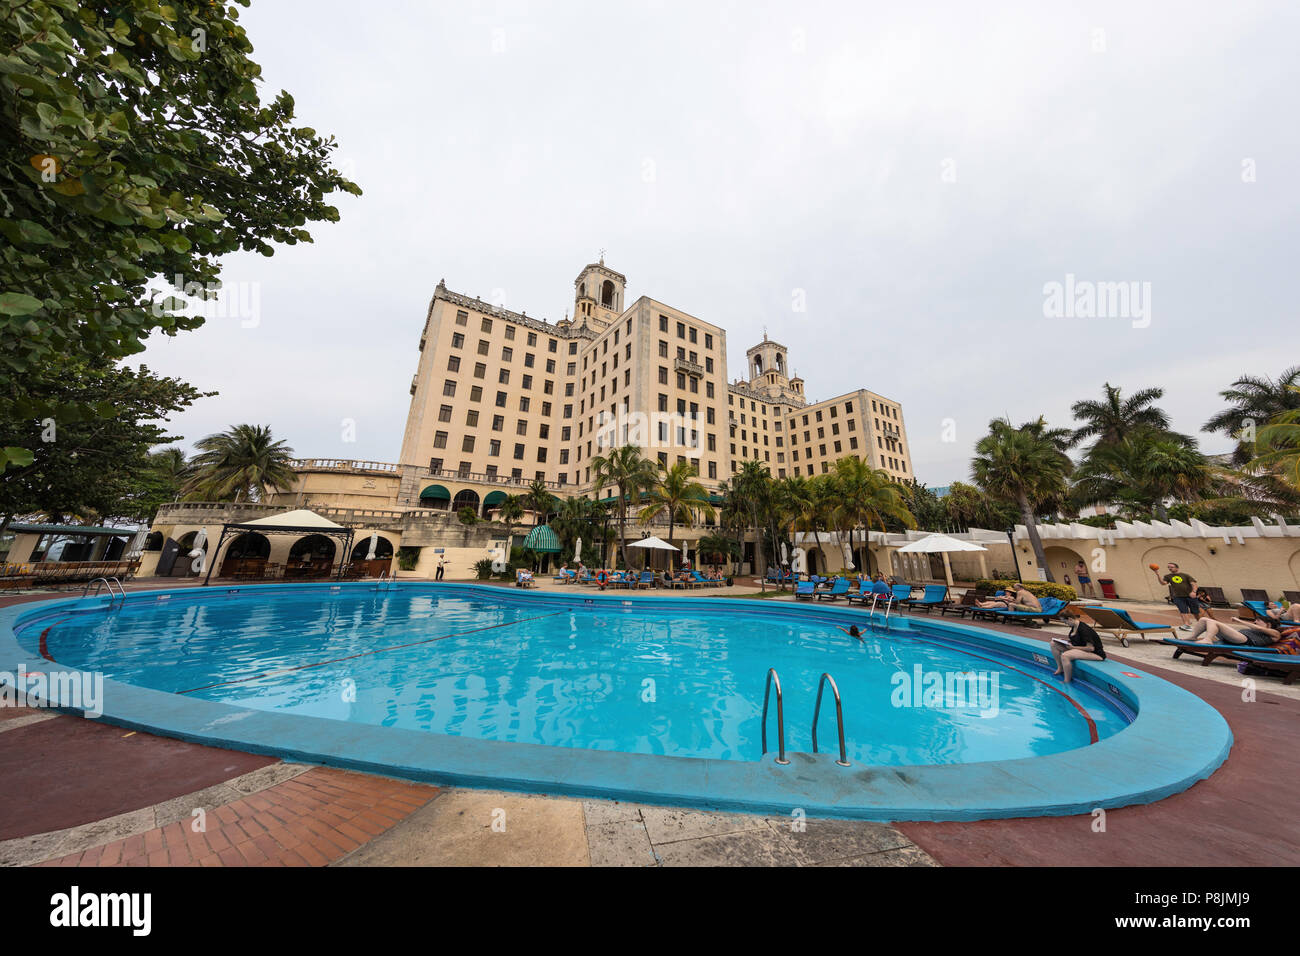 The historic Hotel Nacional de Cuba located on the Malecón in the middle of Vedado, Cuba Stock Photo